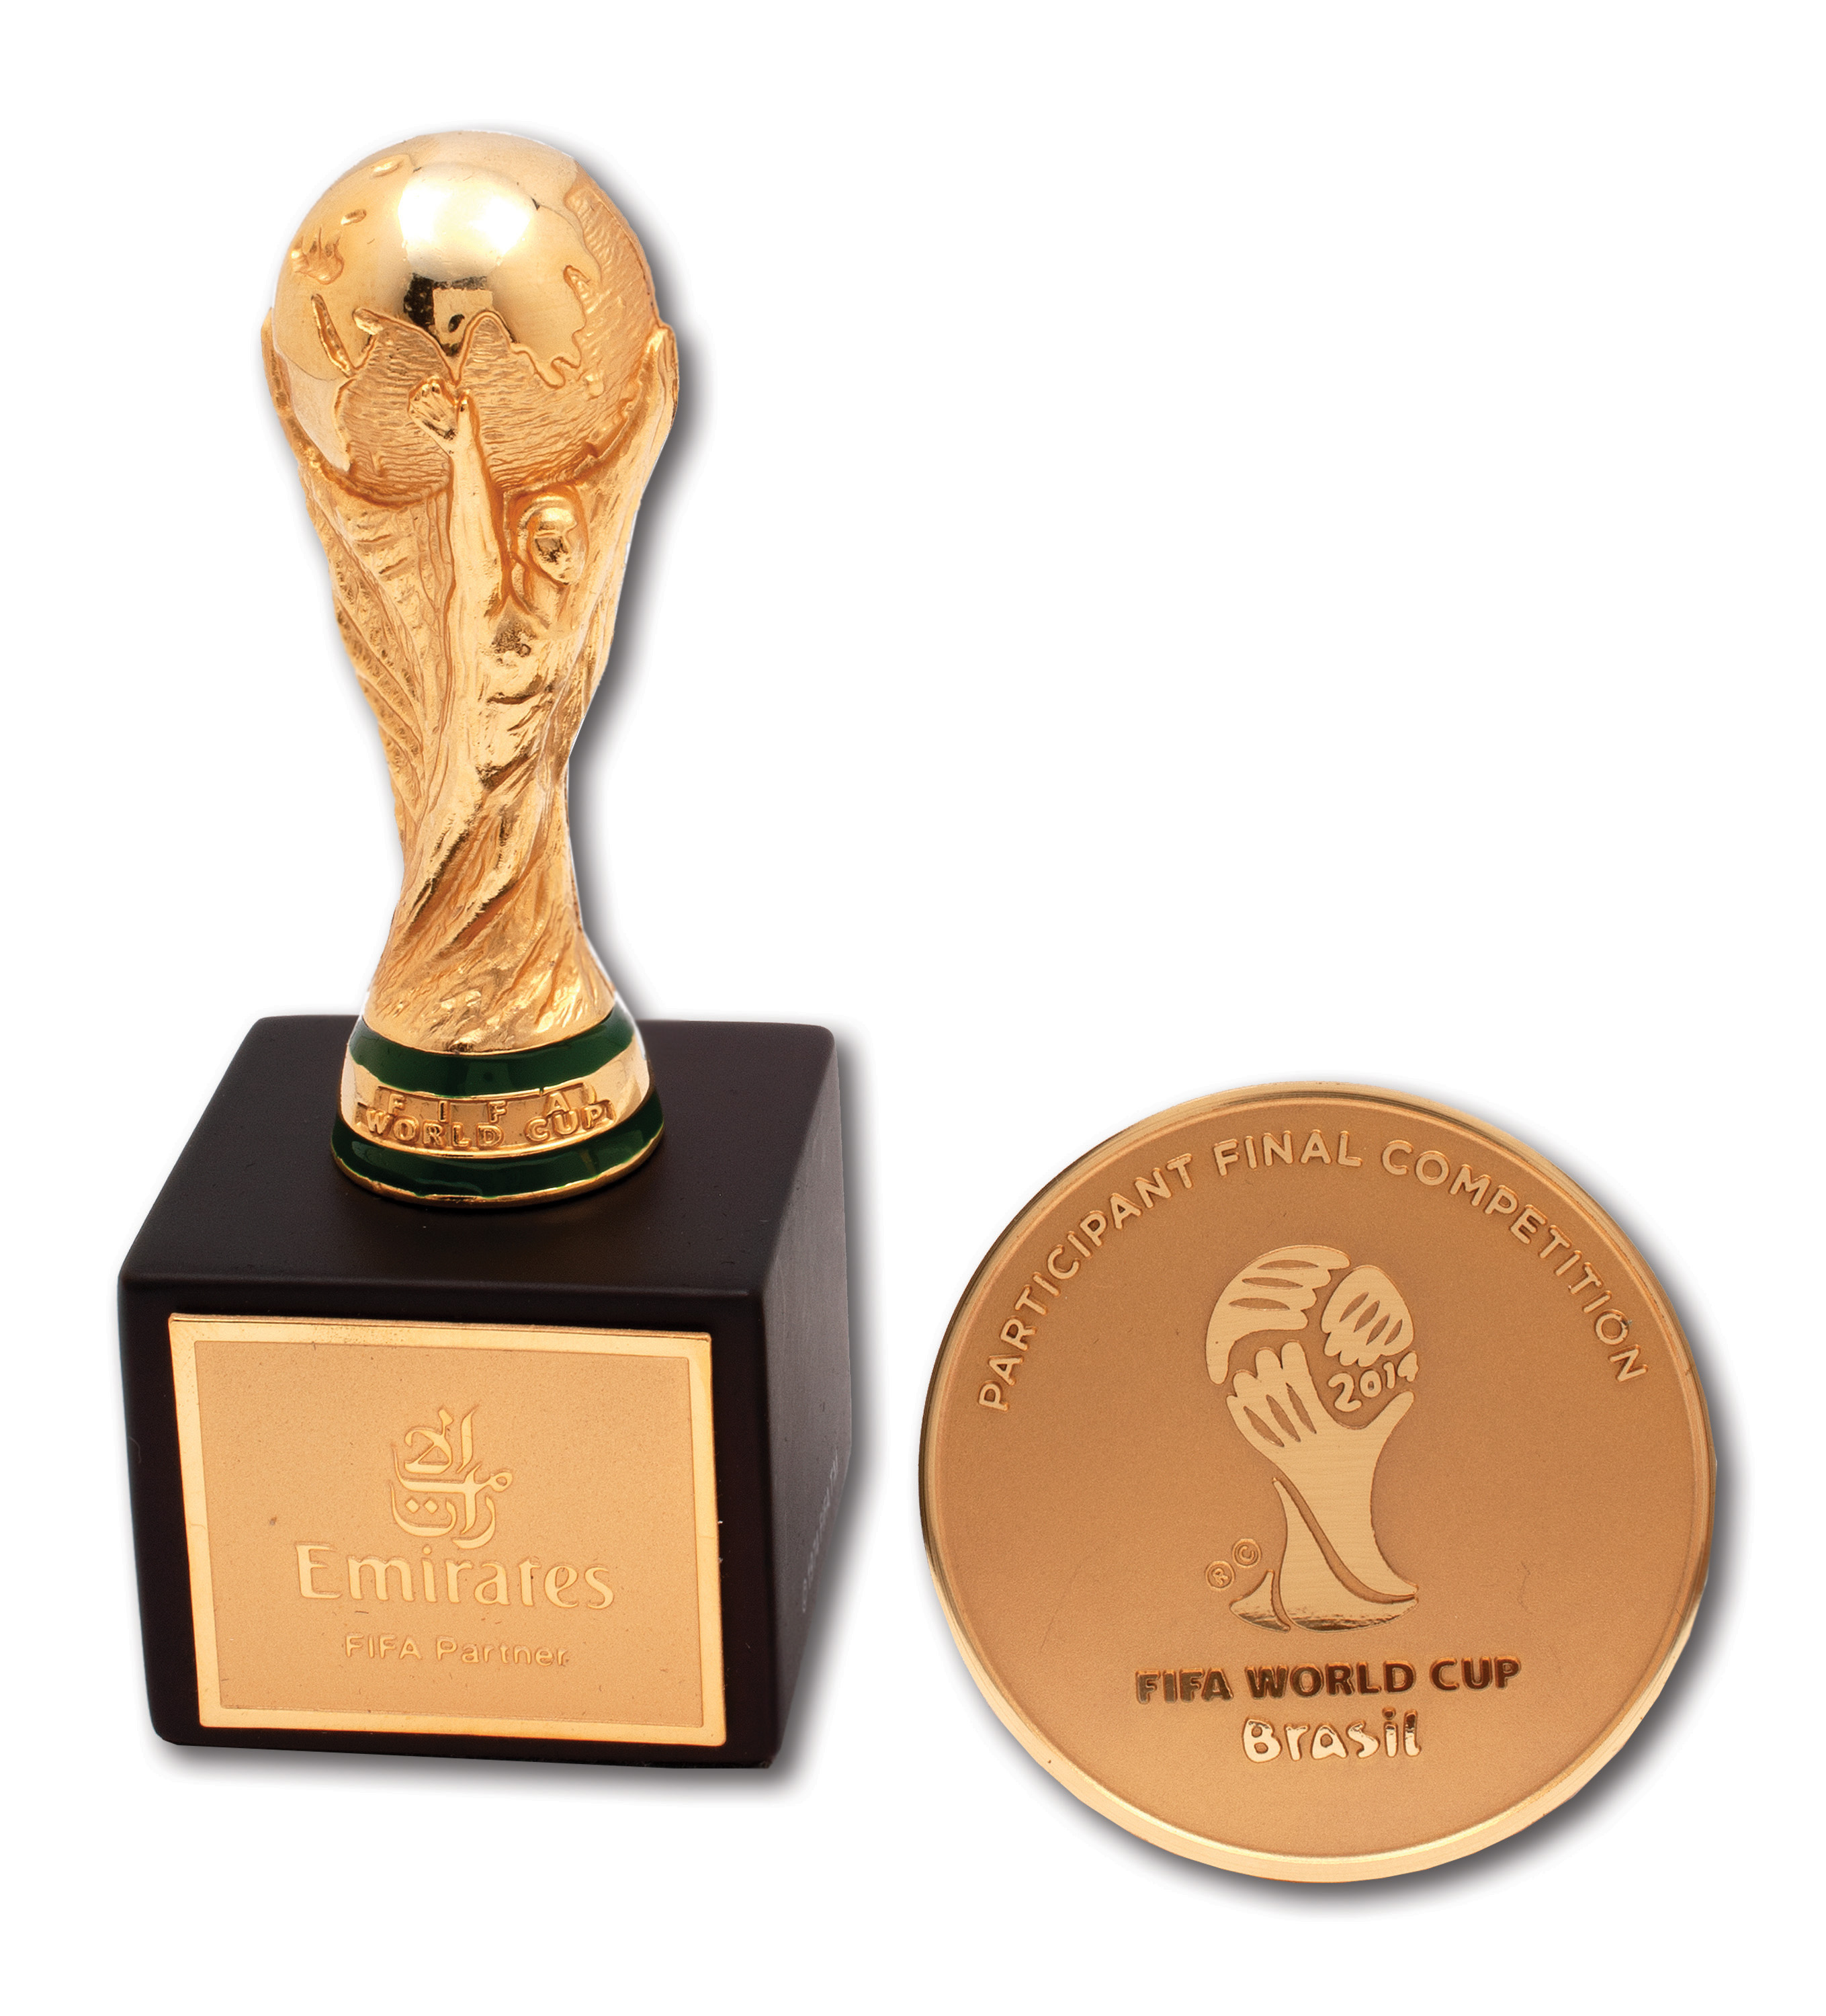 FINAL Match TROPHY hospitality souvenir FIFA WORLD CUP BRAZIL 2014 Licensed  7,5